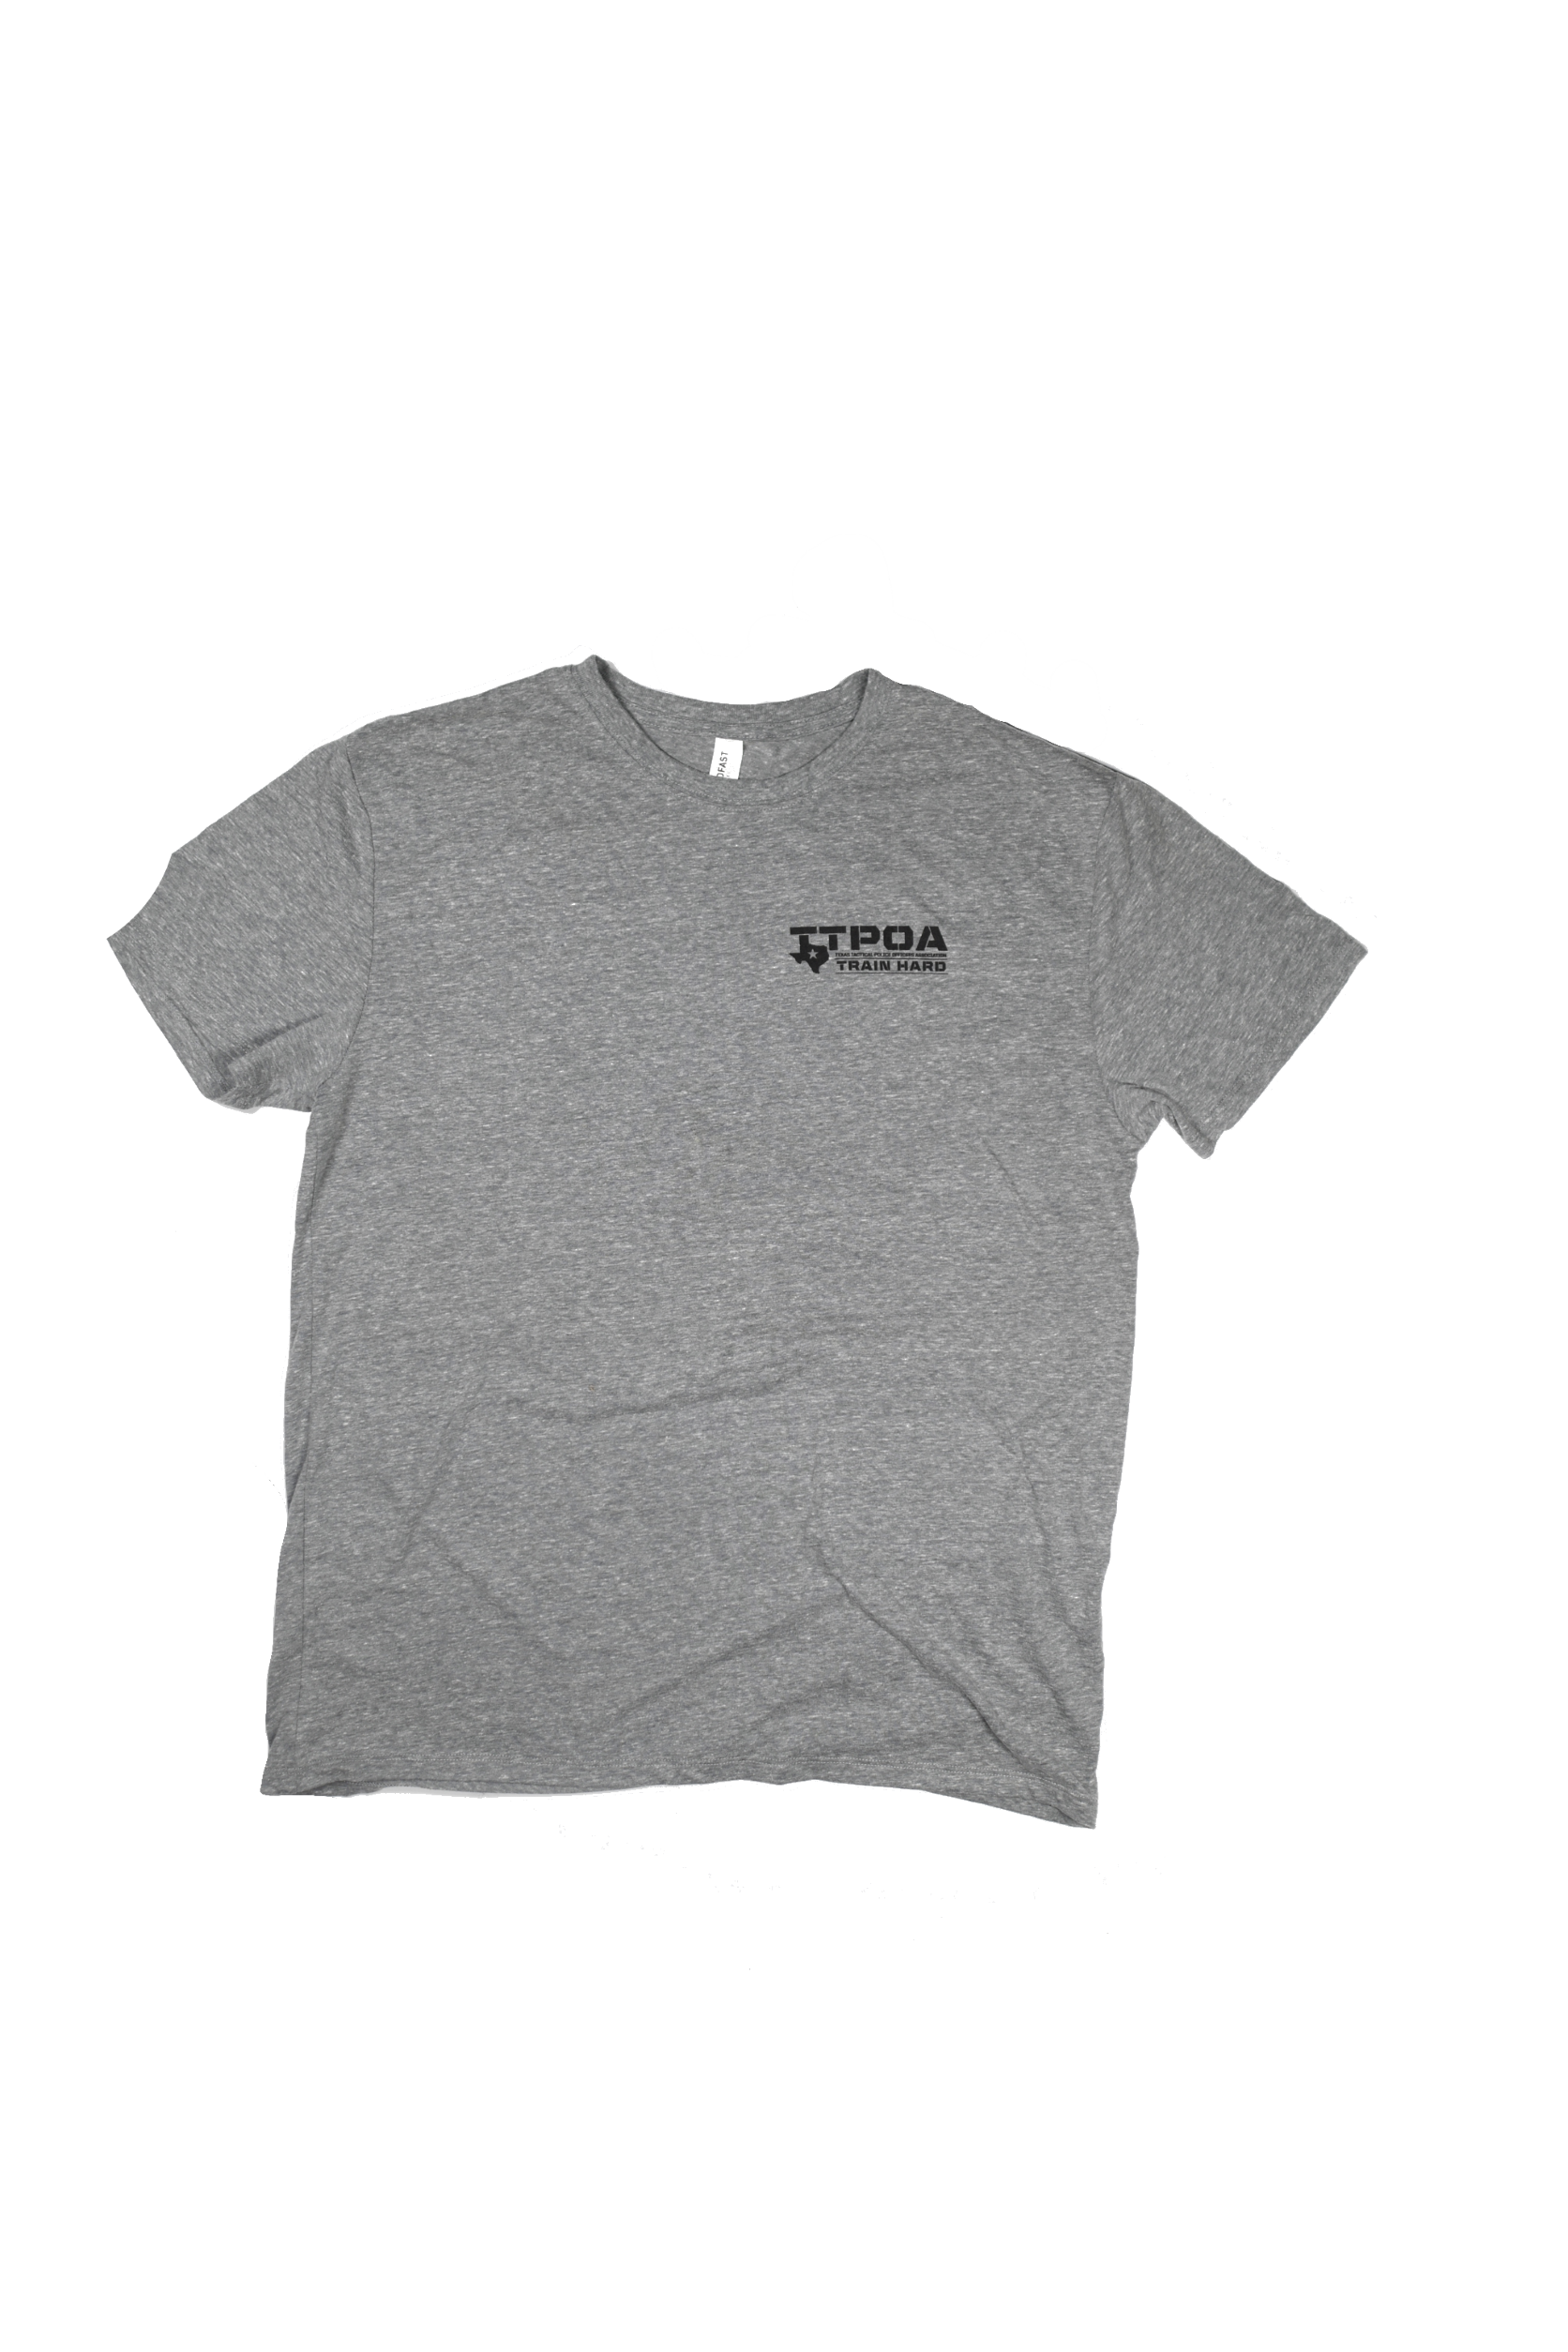 Train Hard Flag T-Shirt – TTPOA Store